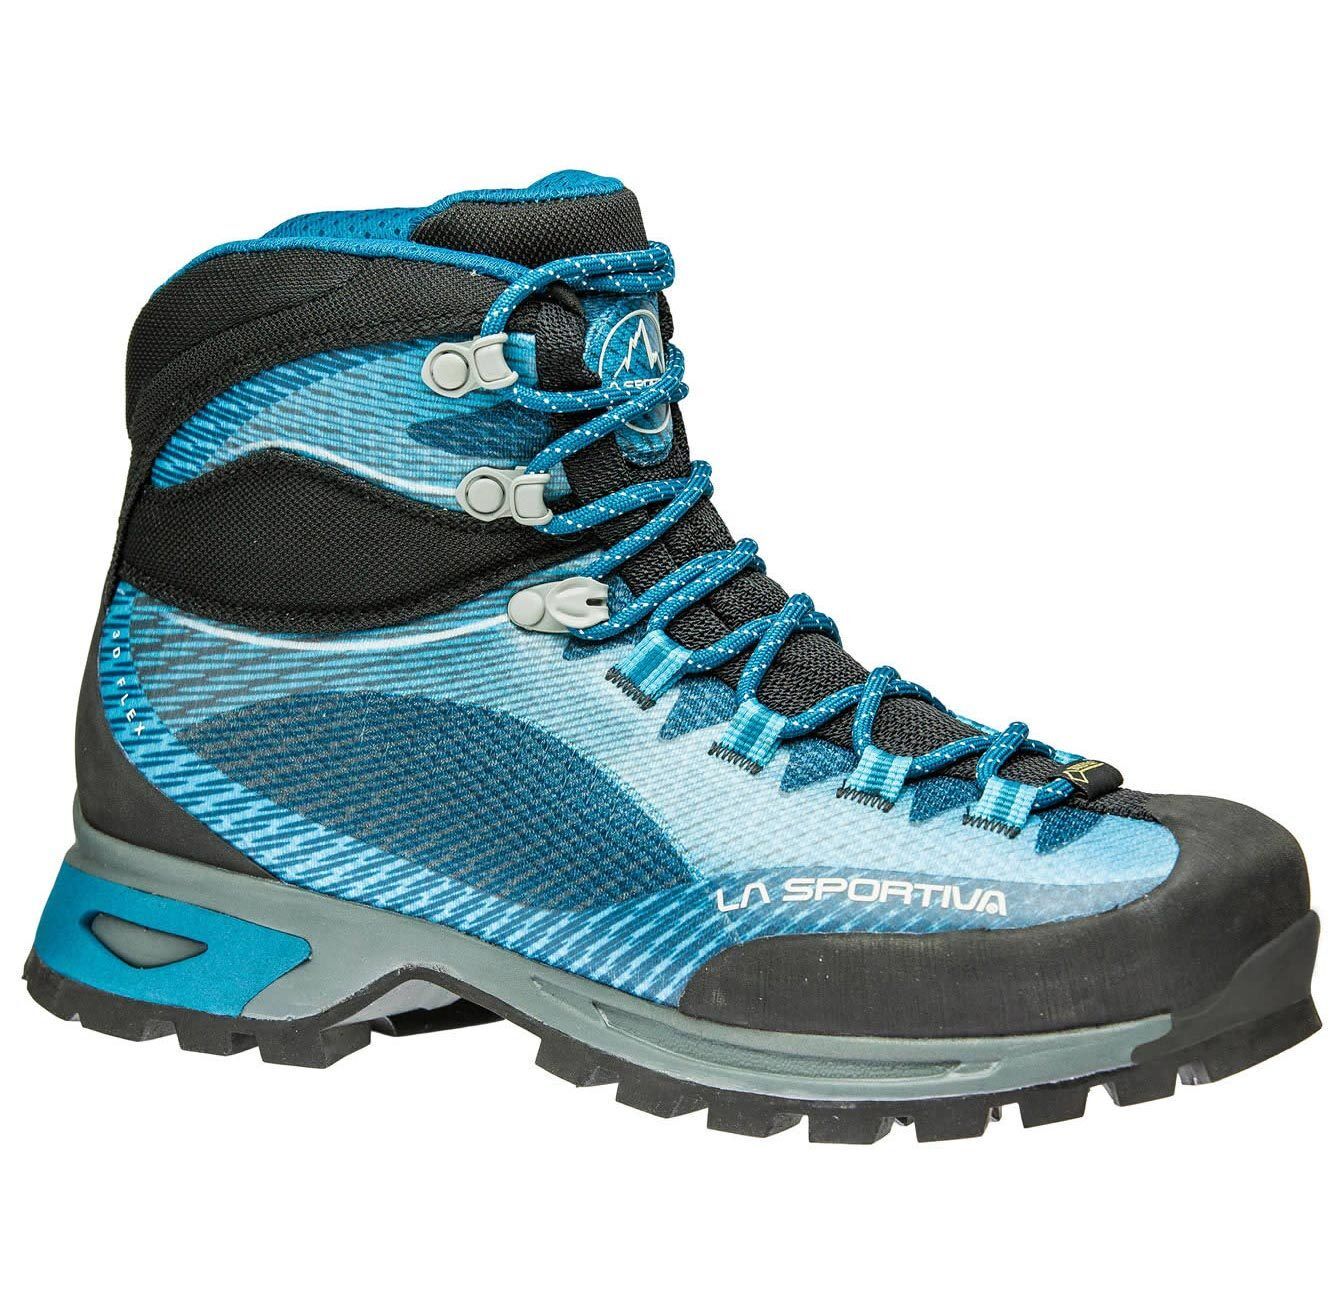 La Sportiva - Trango Trk GTX - Hiking Boots - Women's